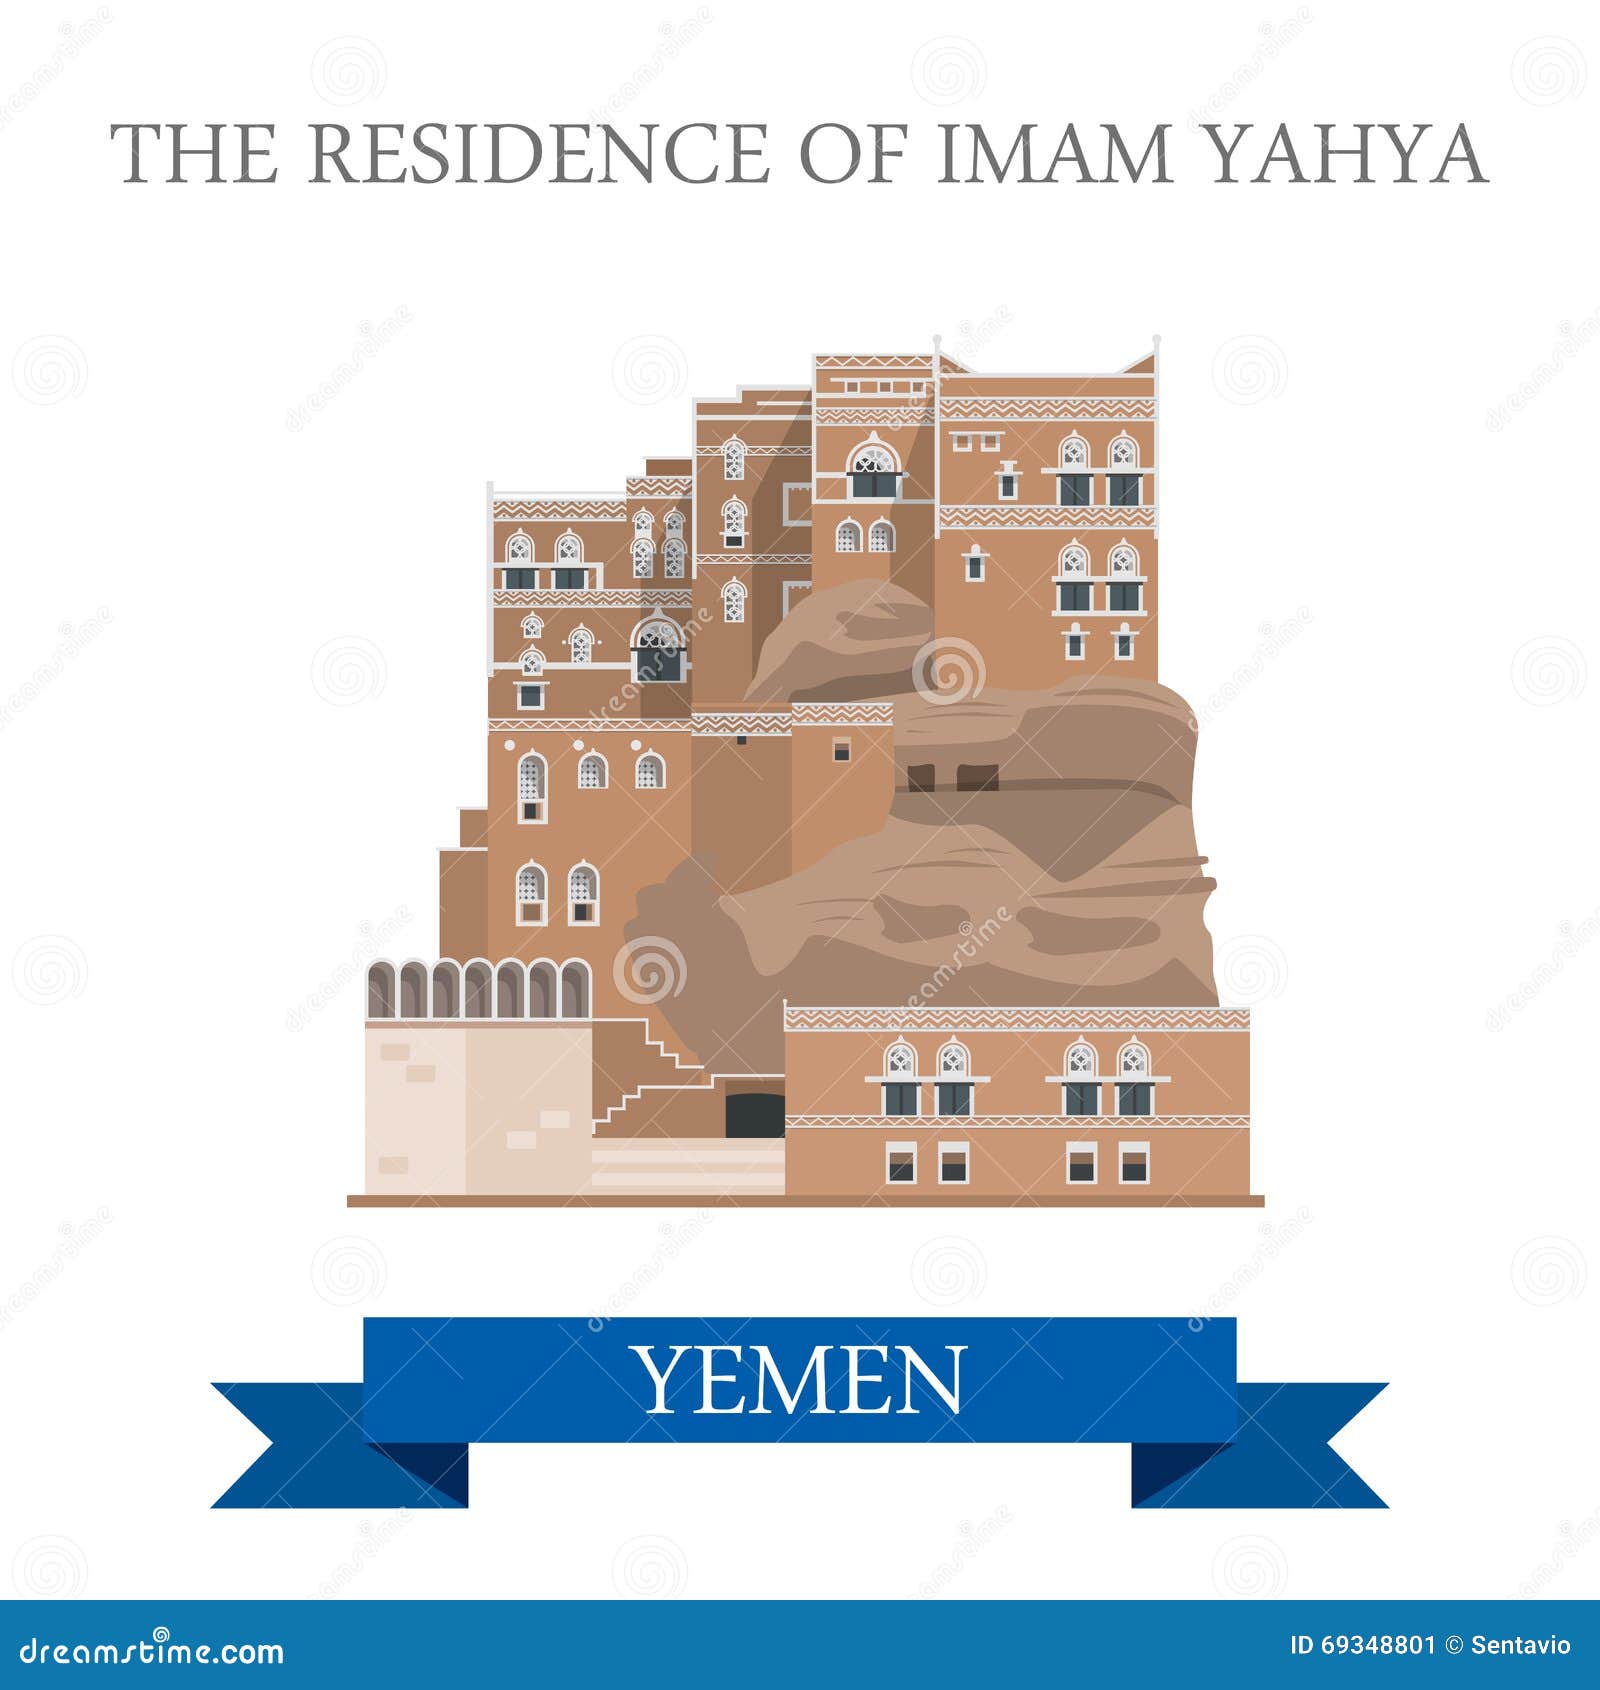 residence of imam yahya yemen attraction travel sightseeing